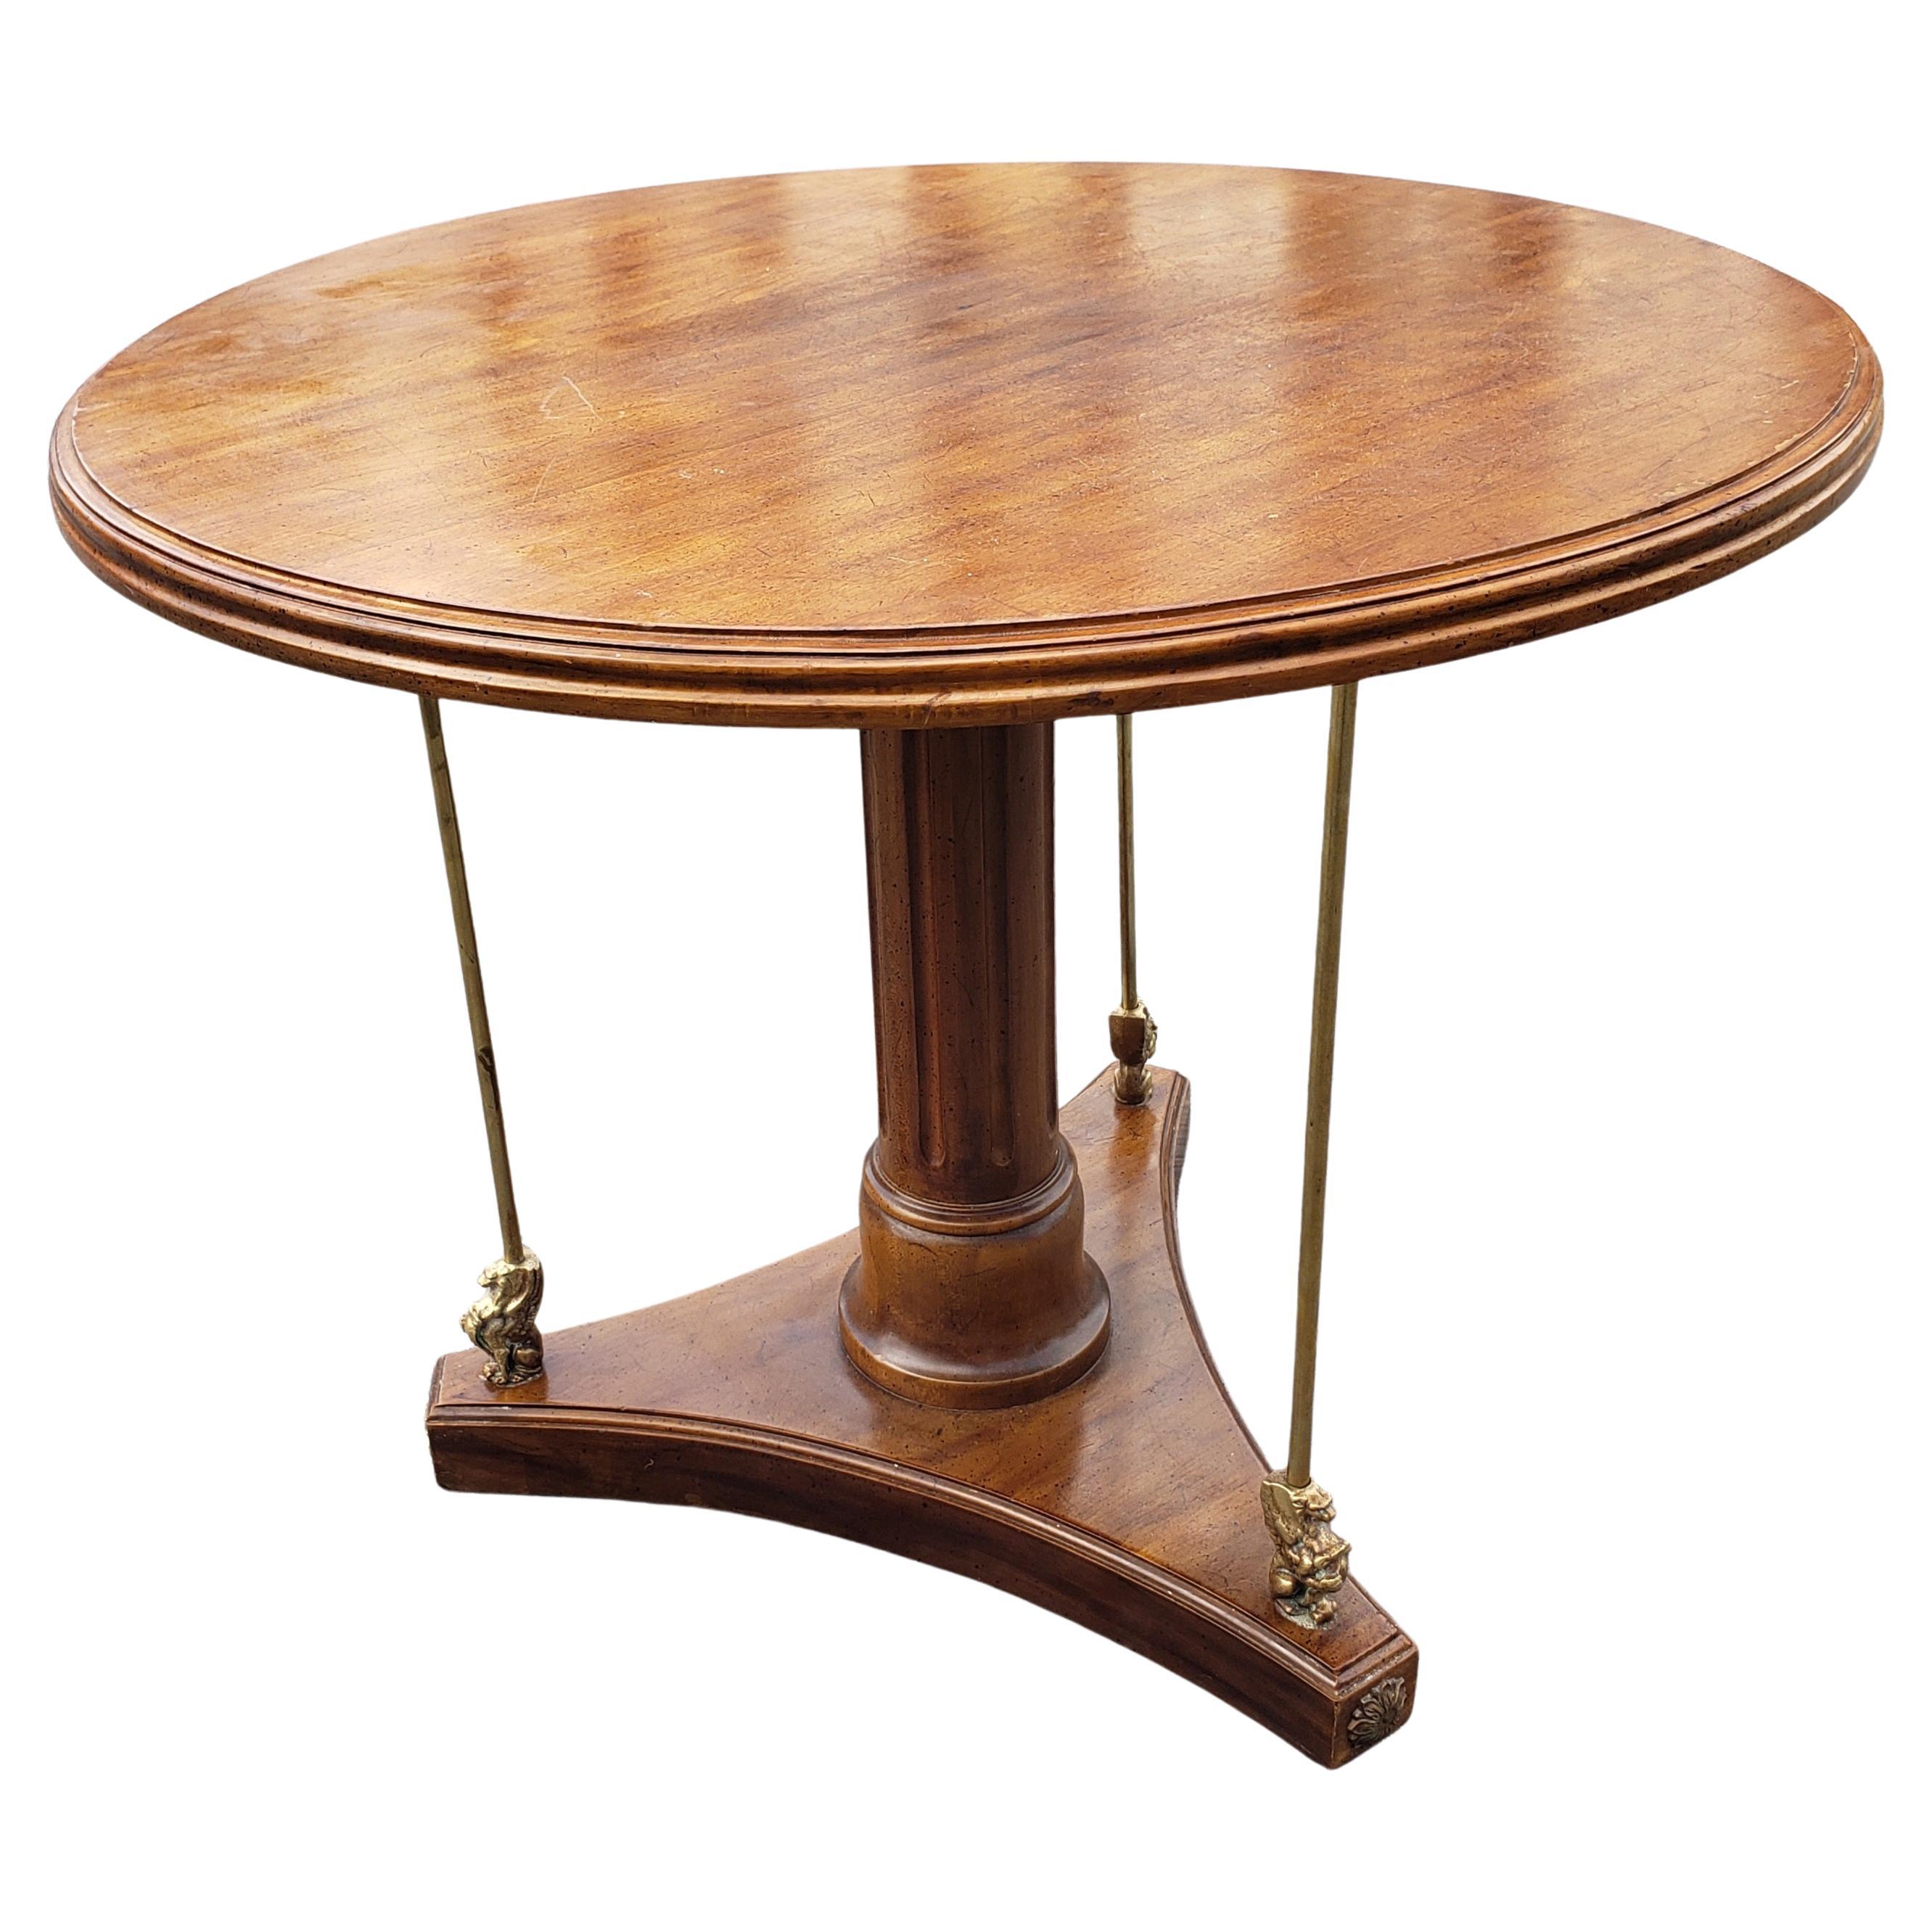 Charles X Style Calais Cherry & Brass Gueridon Pedestal Table by Davis Cabinet